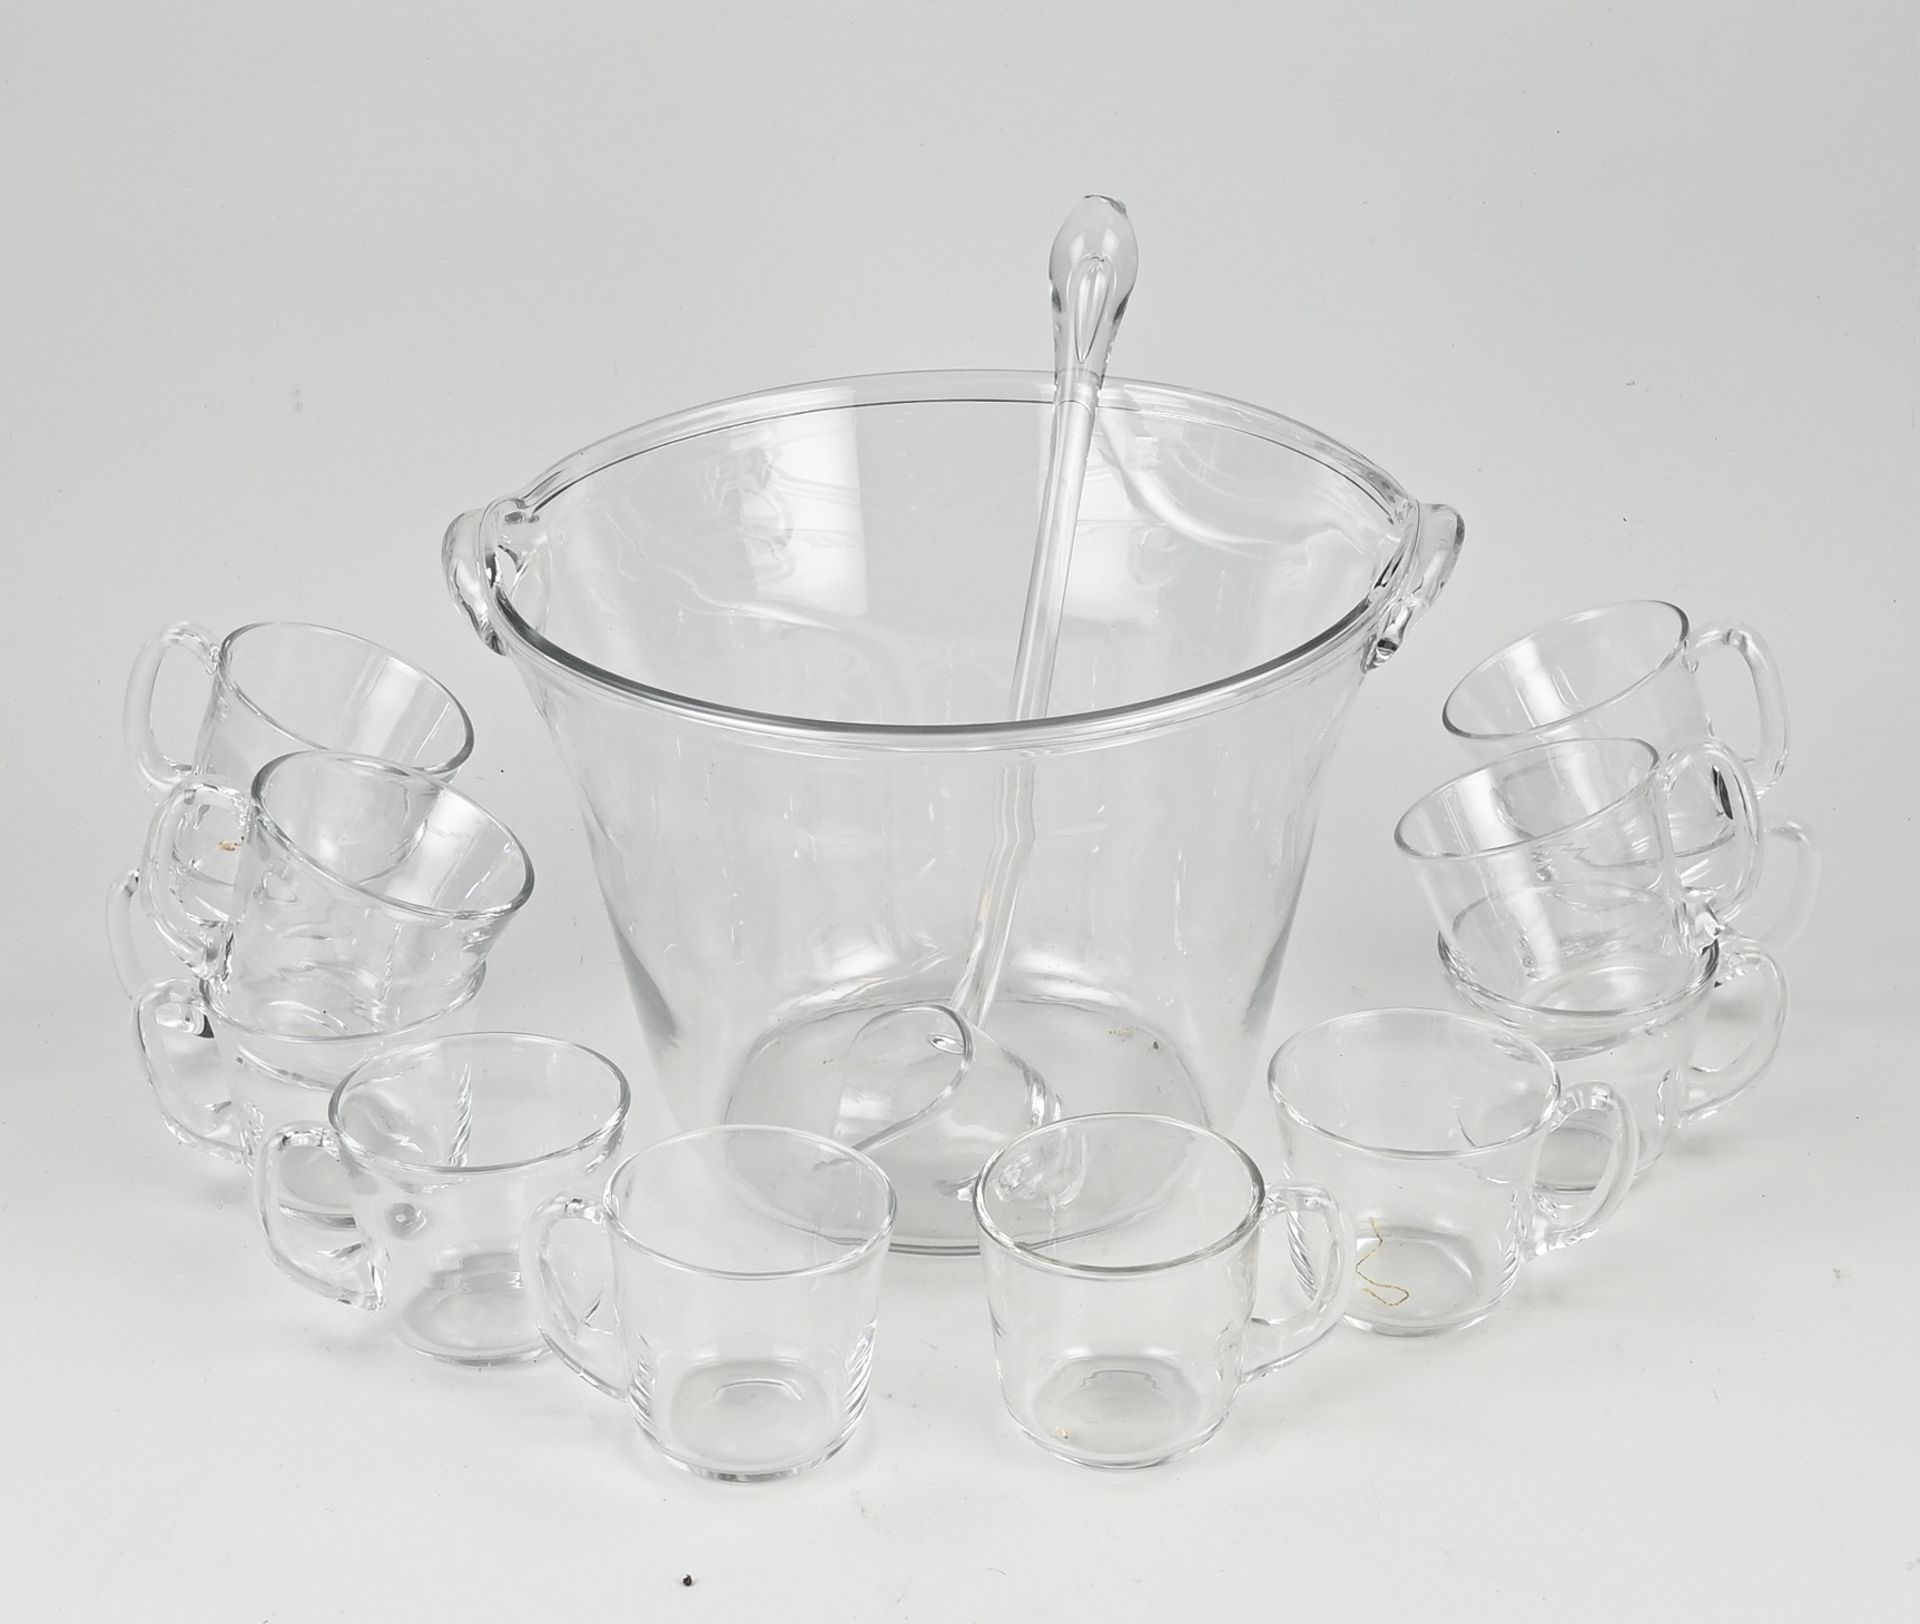 Antique glass bowl set